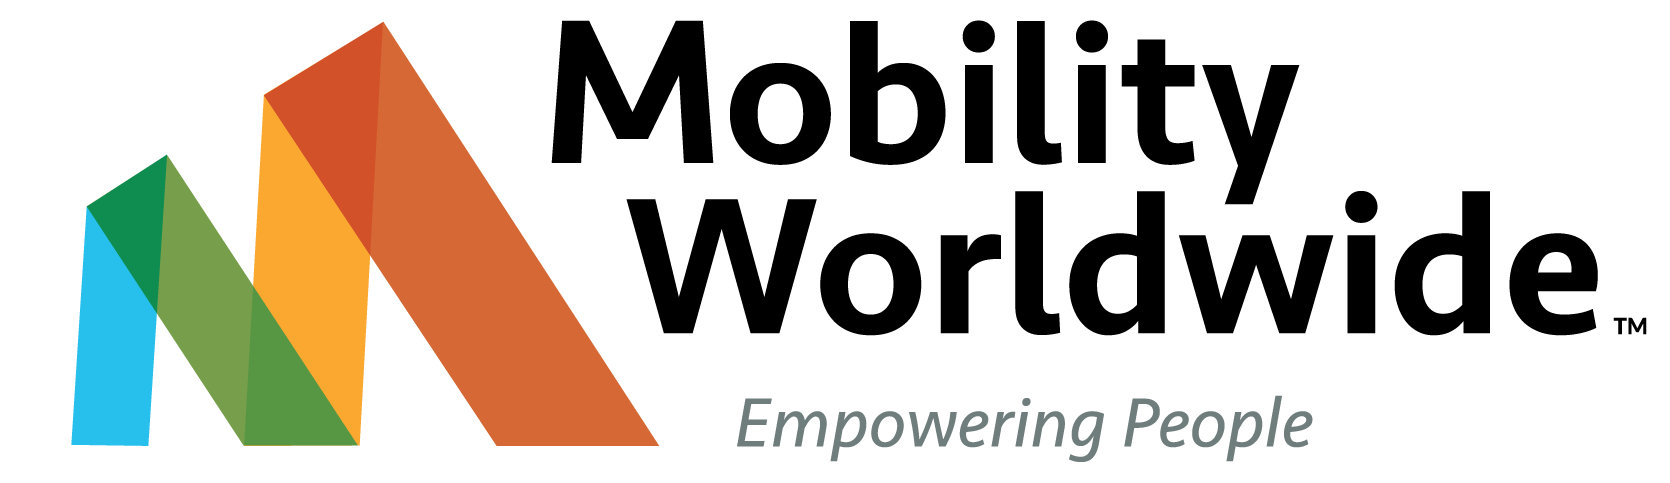 Mobility Worldwide TM - Empowering People Logo Horizontal